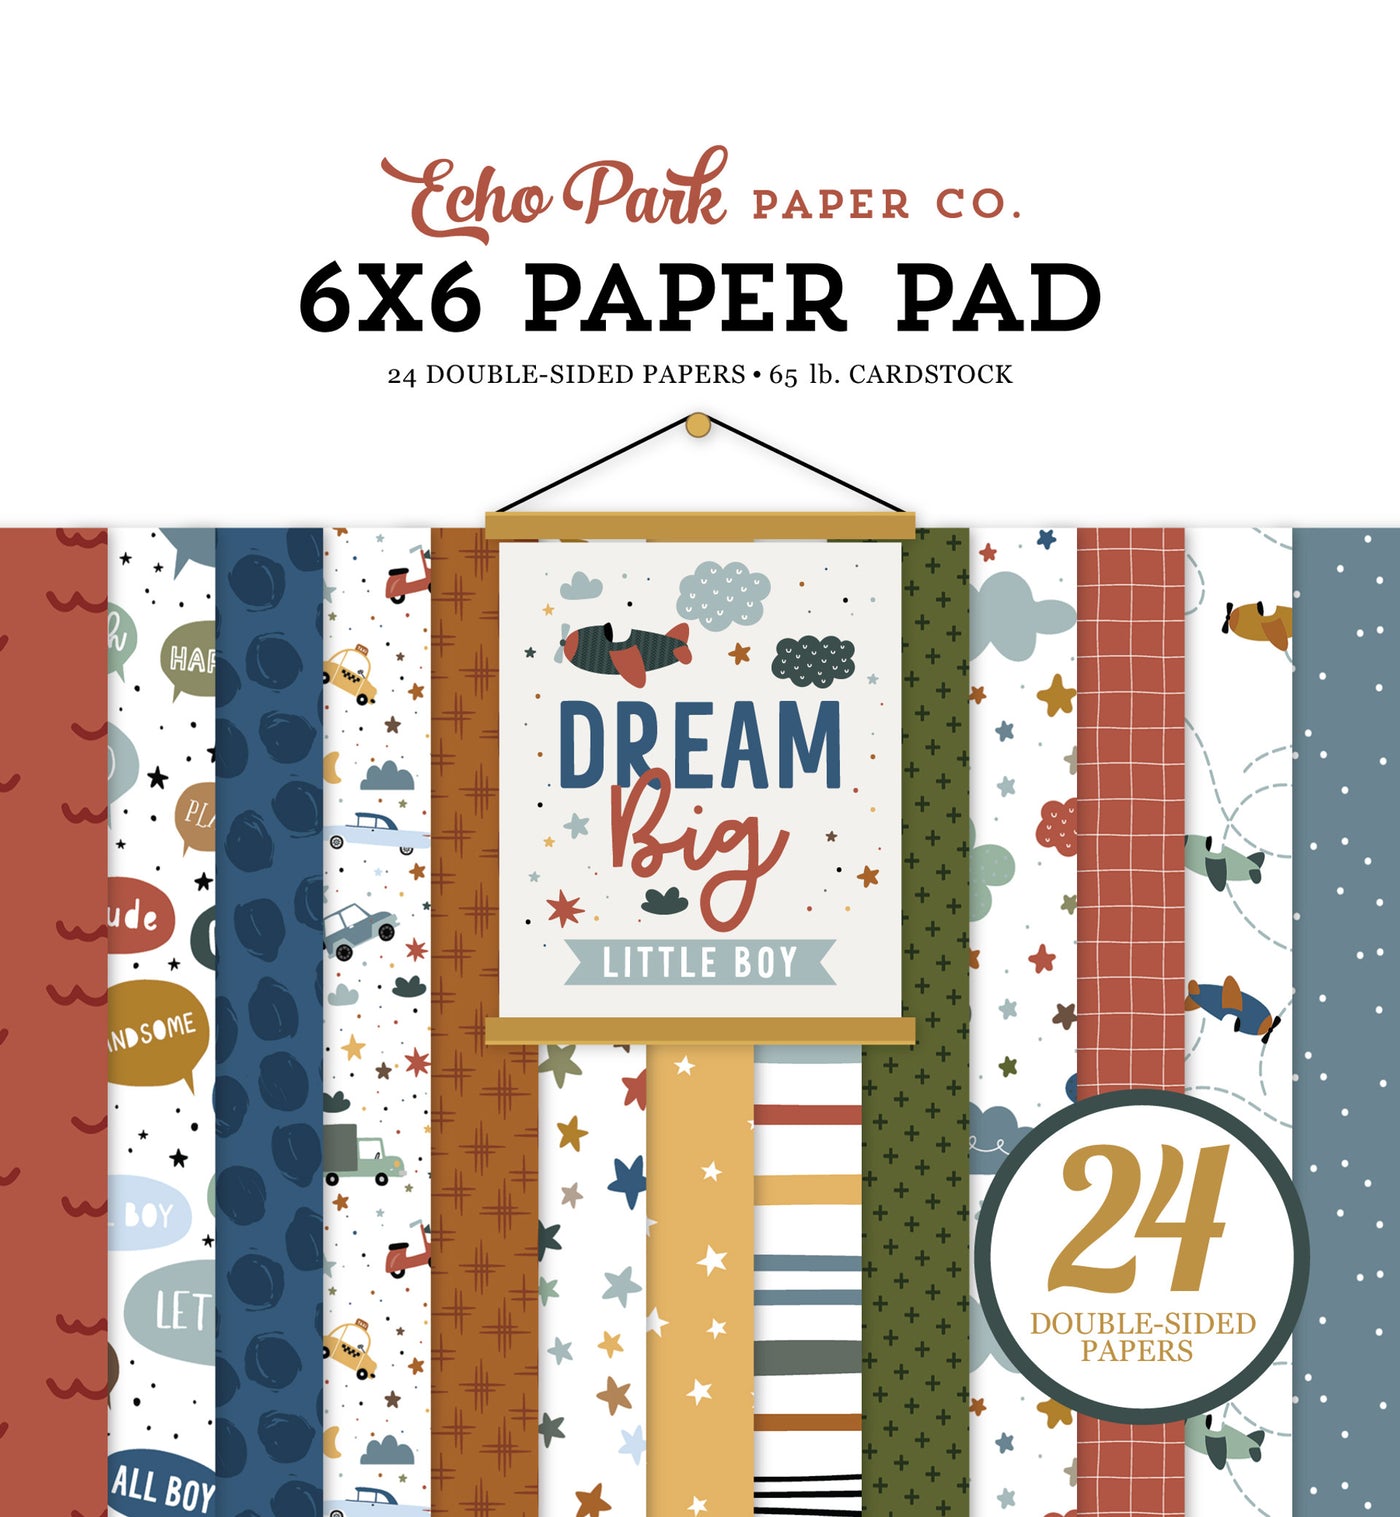 DREAM BIG LITTLE BOY 6x6 Paper Pad - Echo Park